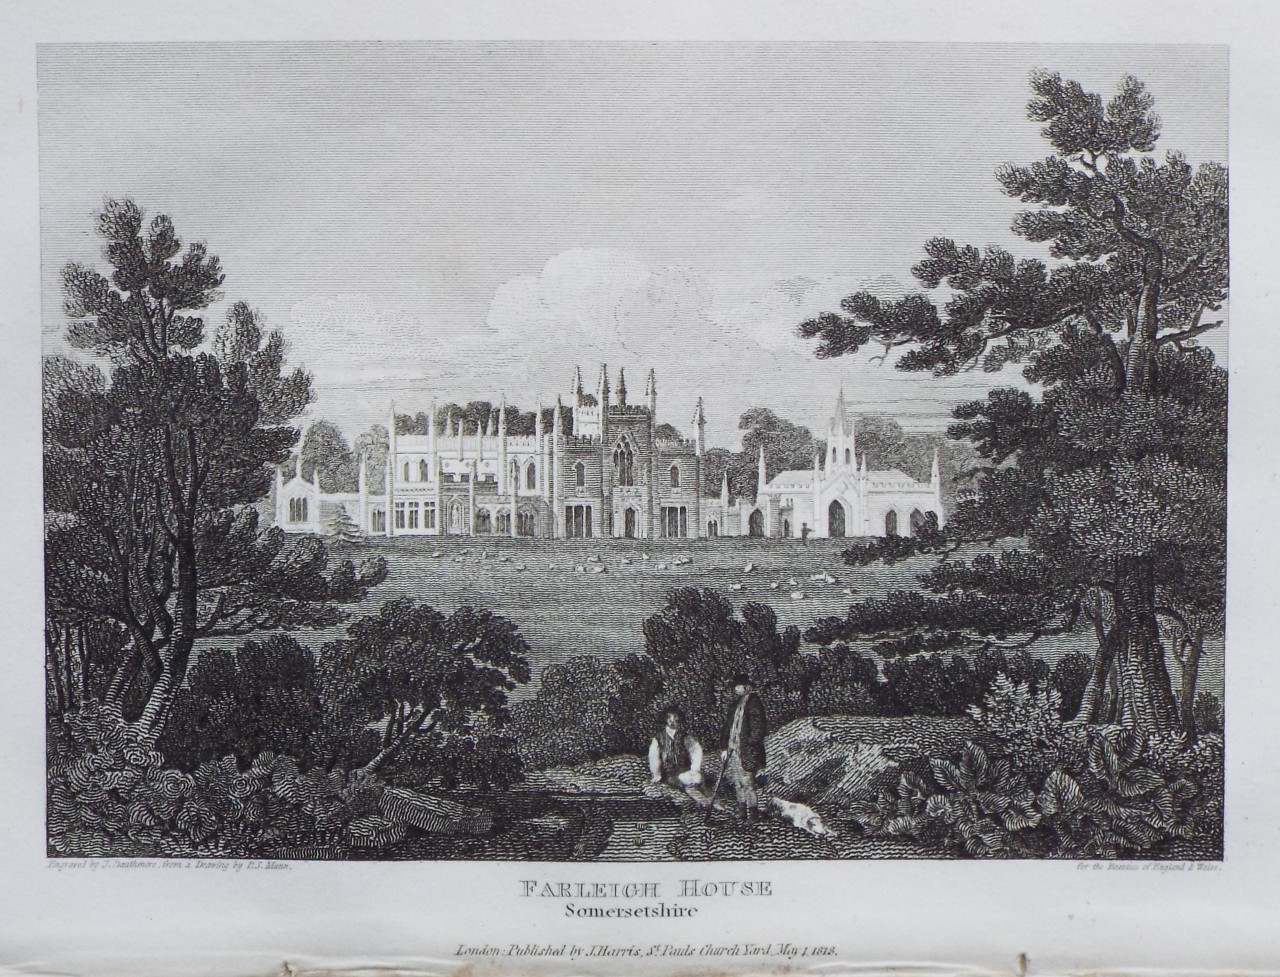 Print - Farleigh House, Somersetshire - Dauthmore